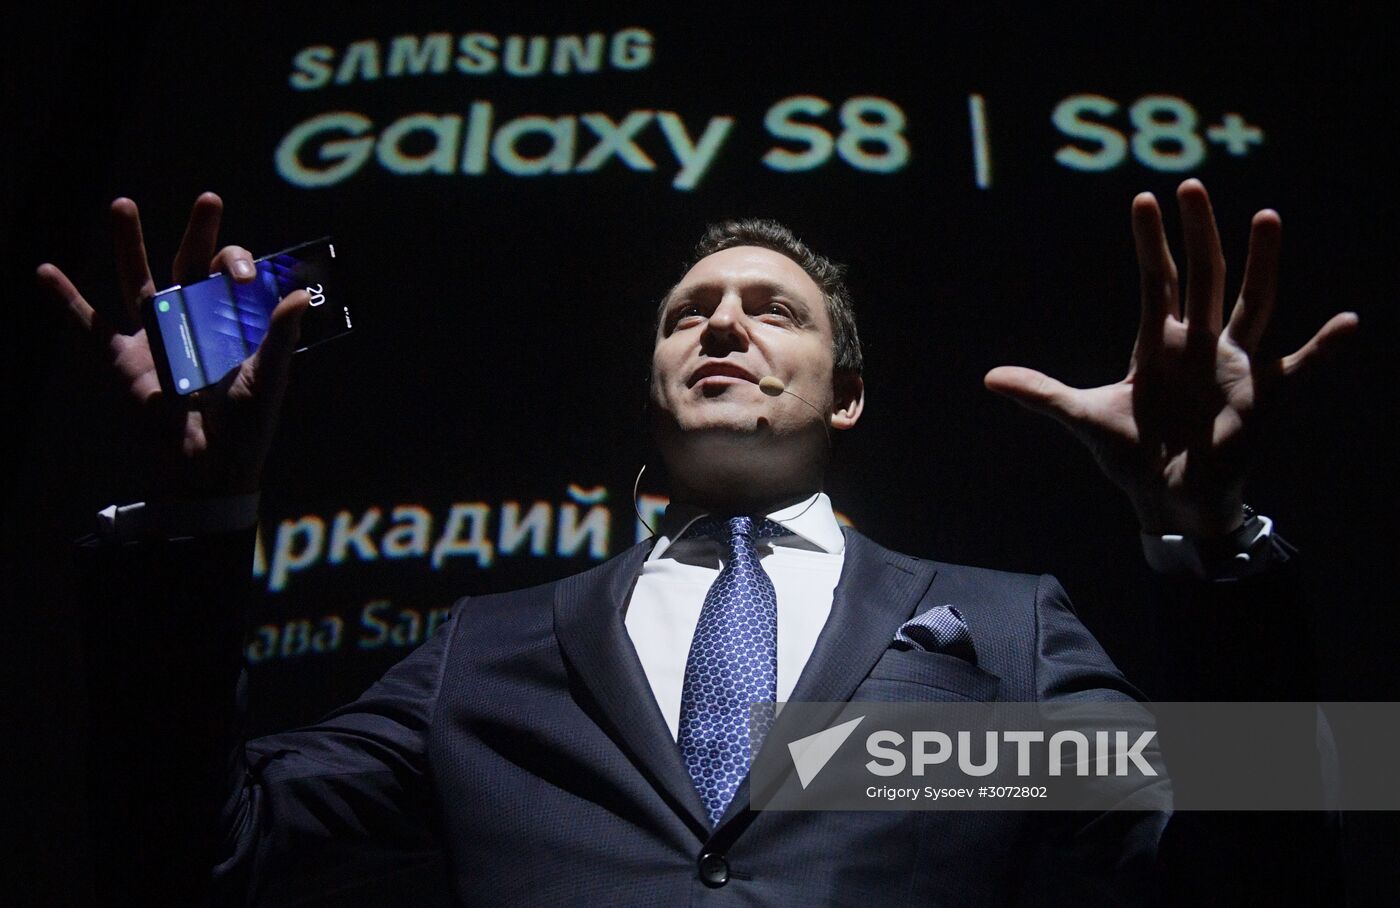 Presentation of new model of Samsung Galaxy S8 smartphone